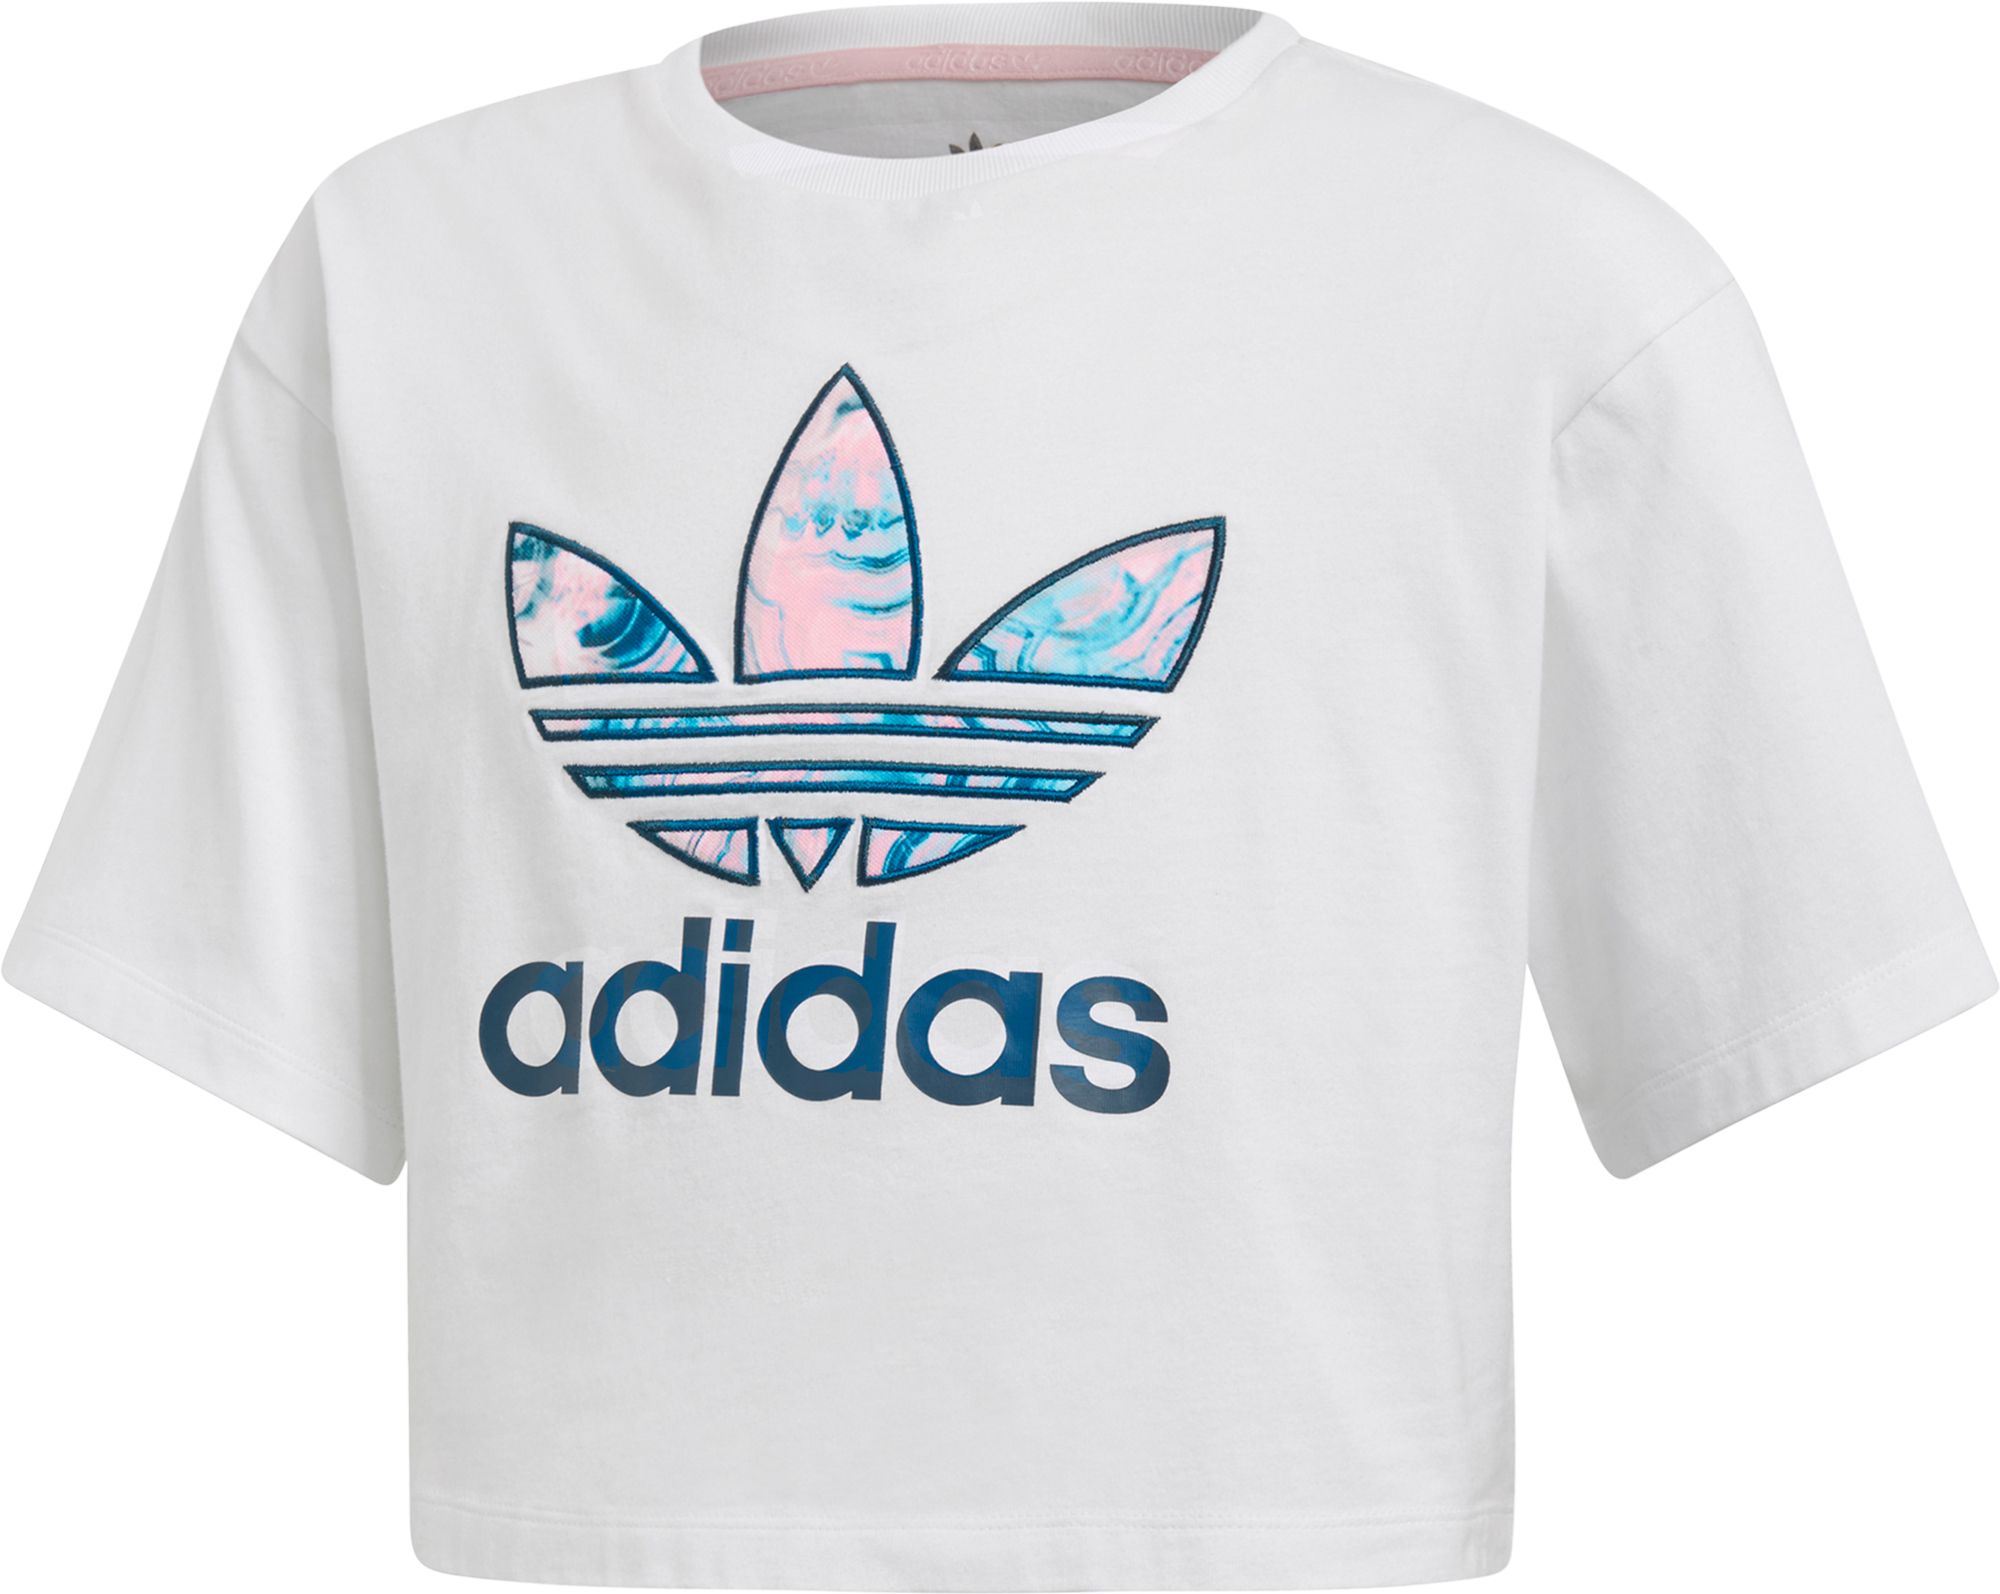 Adidas T Shirt Ladies Off 70 Best Deals Online - posebna prodaja res udobno prva stopnja adidas t shirt roblox familialsystem com